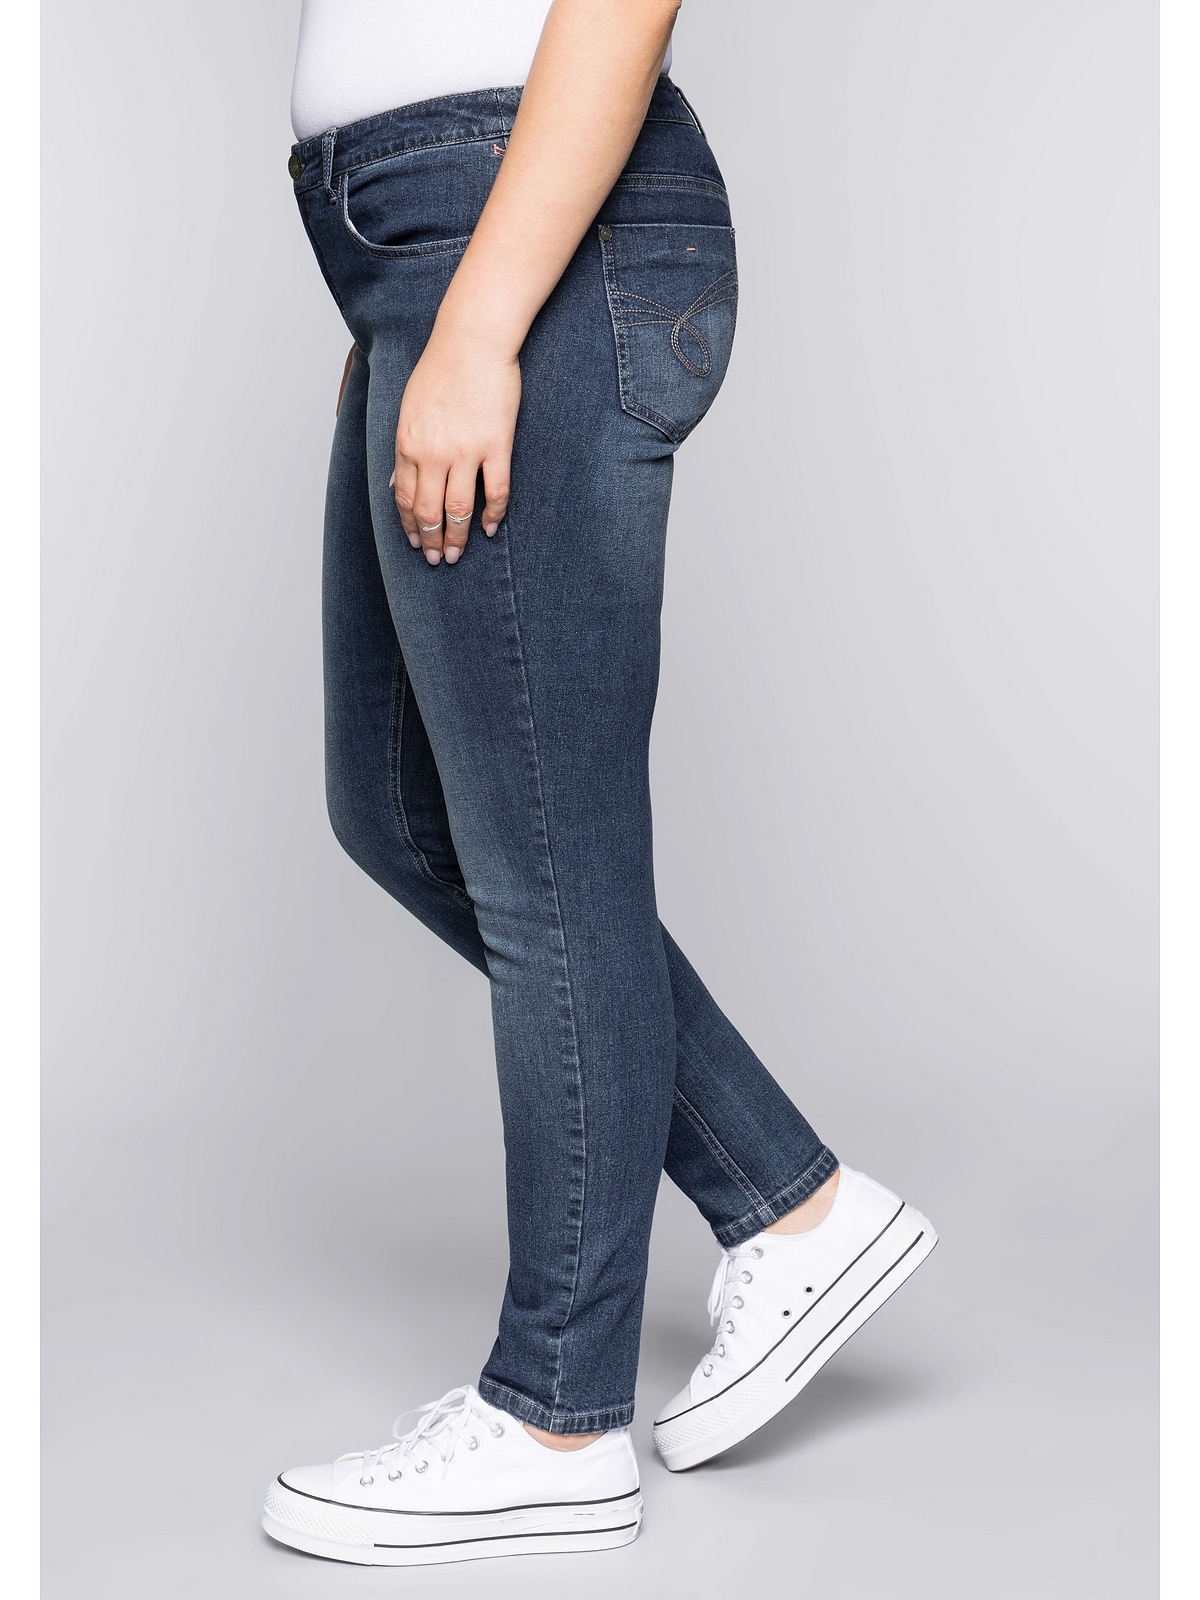 Sheego Stretch-Jeans »Große Größen«, in schmaler Form